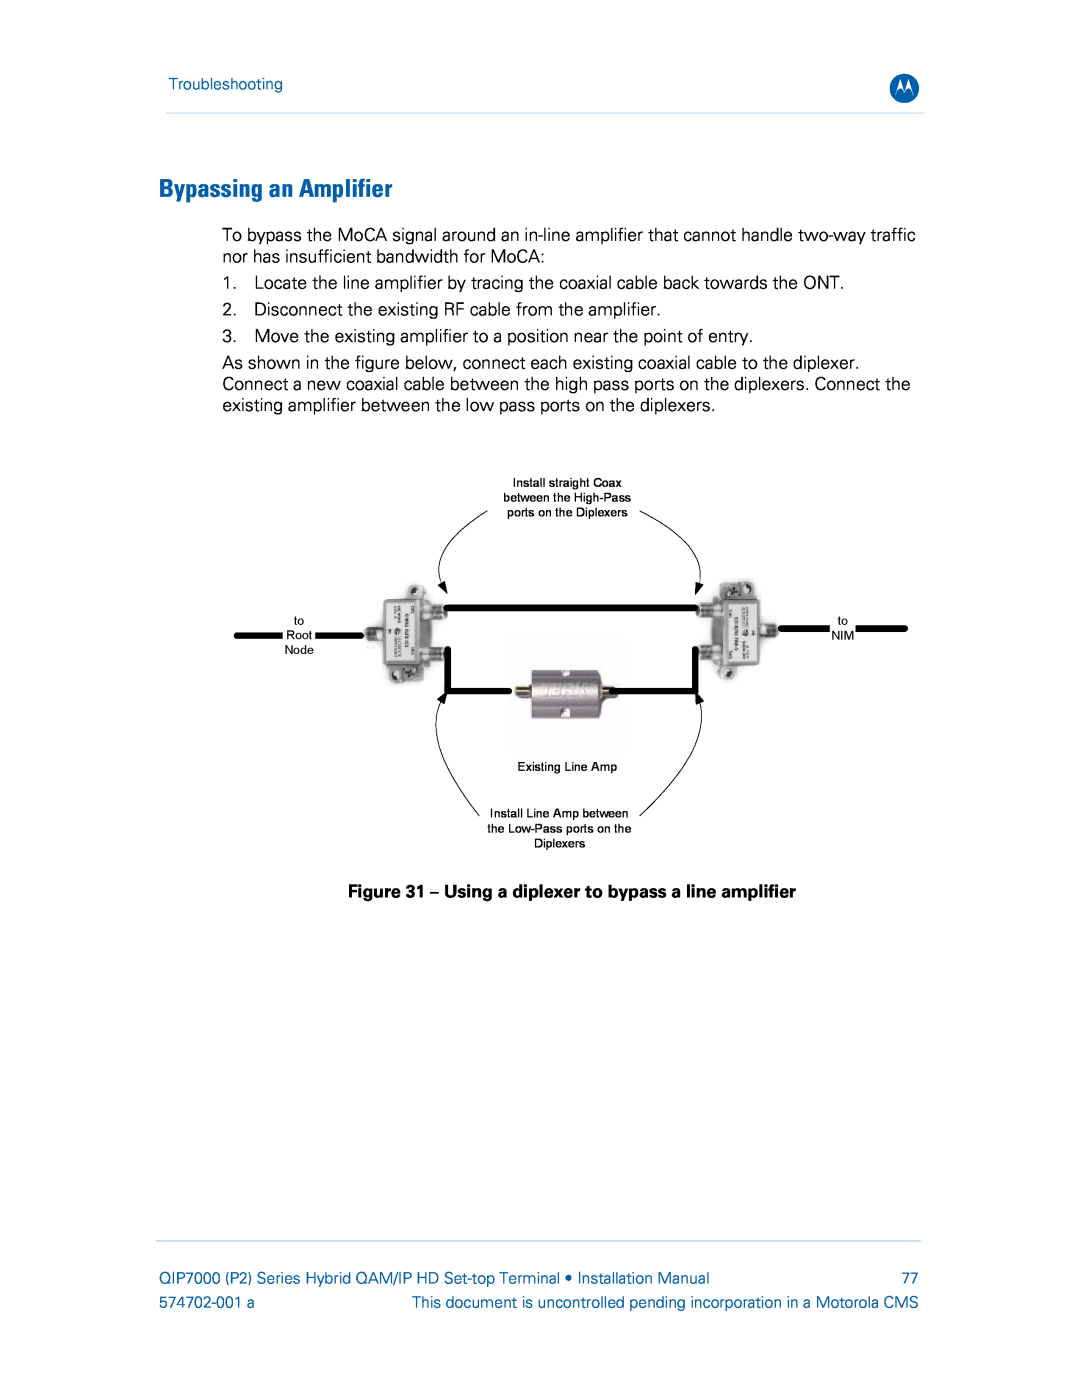 Motorola QIP7000 installation manual Bypassing an Amplifier, Using a diplexer to bypass a line amplifier 